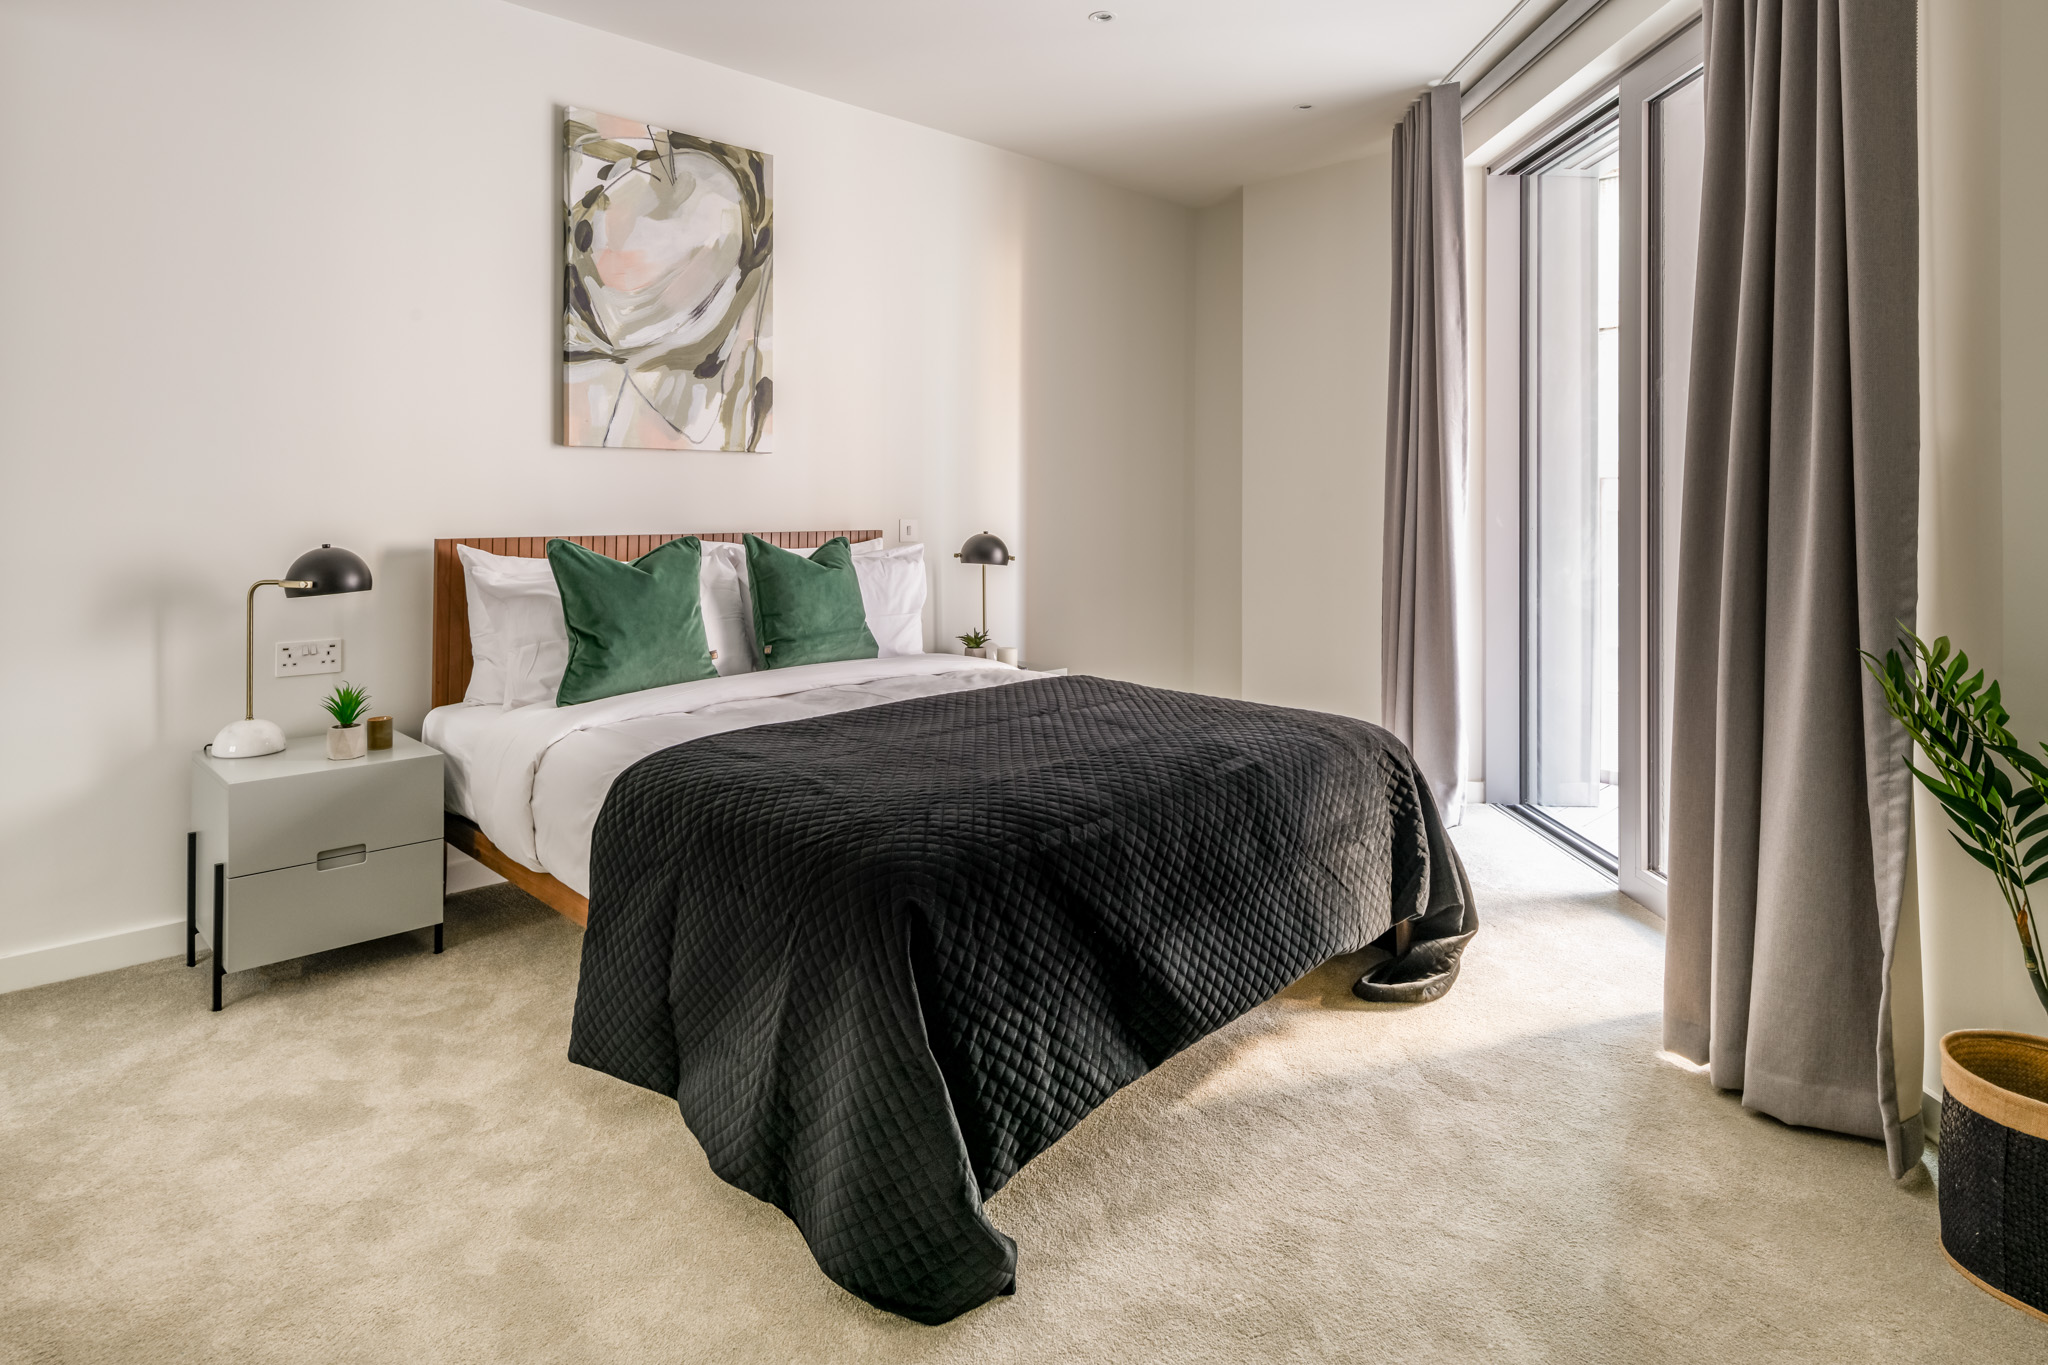 Bedroom - Two Bedroom Apartment - Urban rest Battersea Apartments - London - Urban Rest